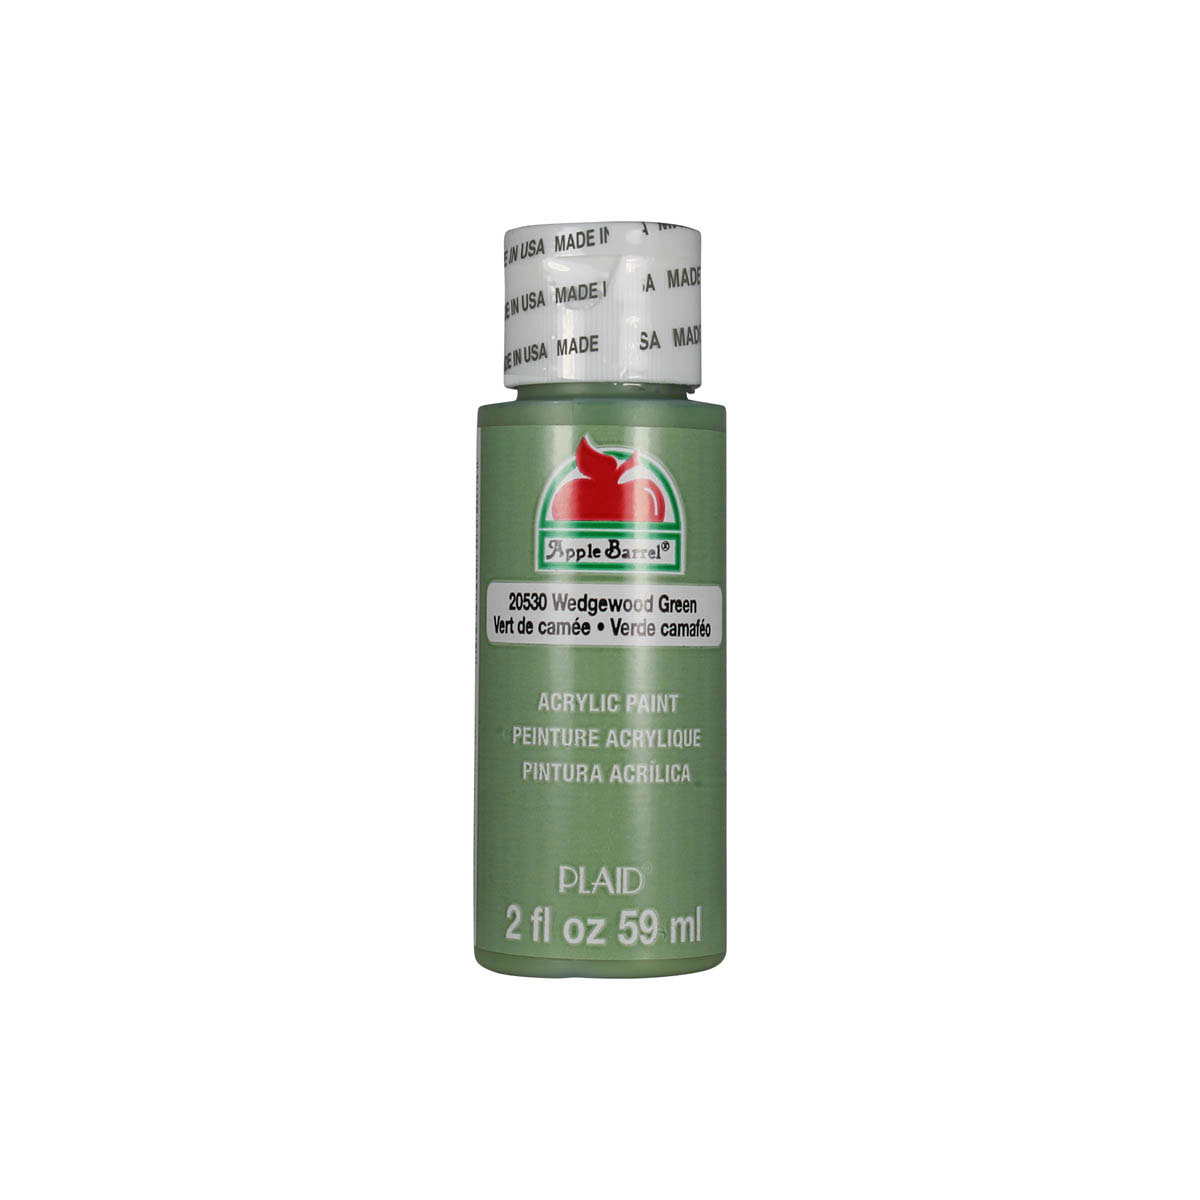 Apple Barrel ® Colors - Wedgewood Green, 2 oz. - 20530